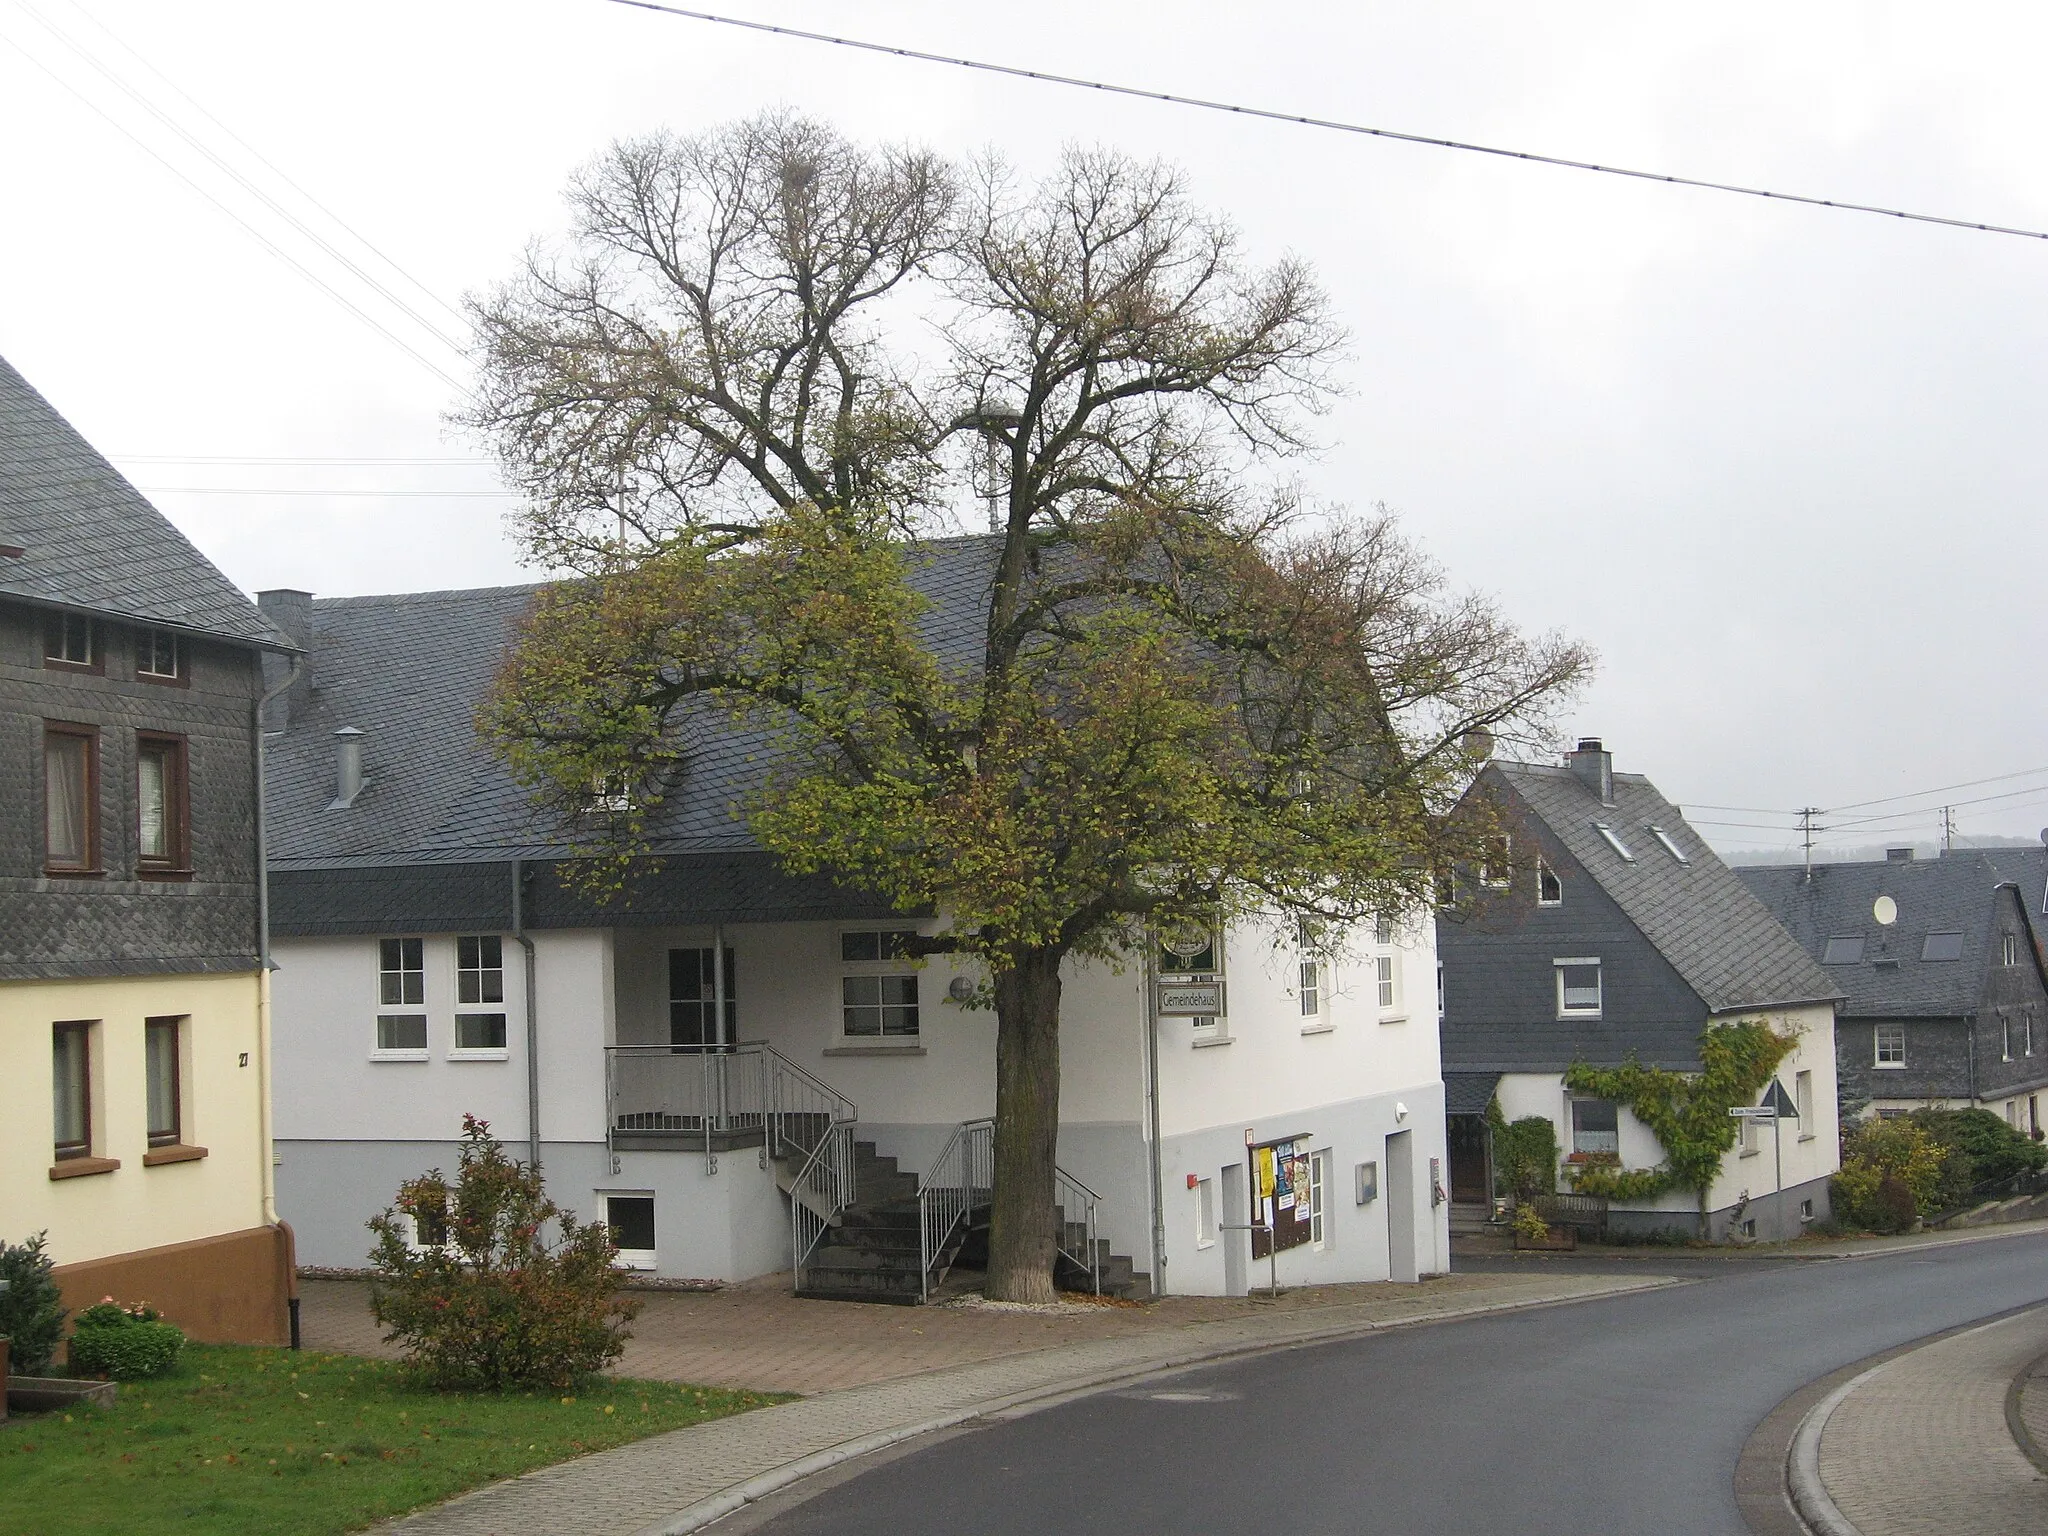 Photo showing: Village Raversbeuren in the Hunsrück landscape, Germany.